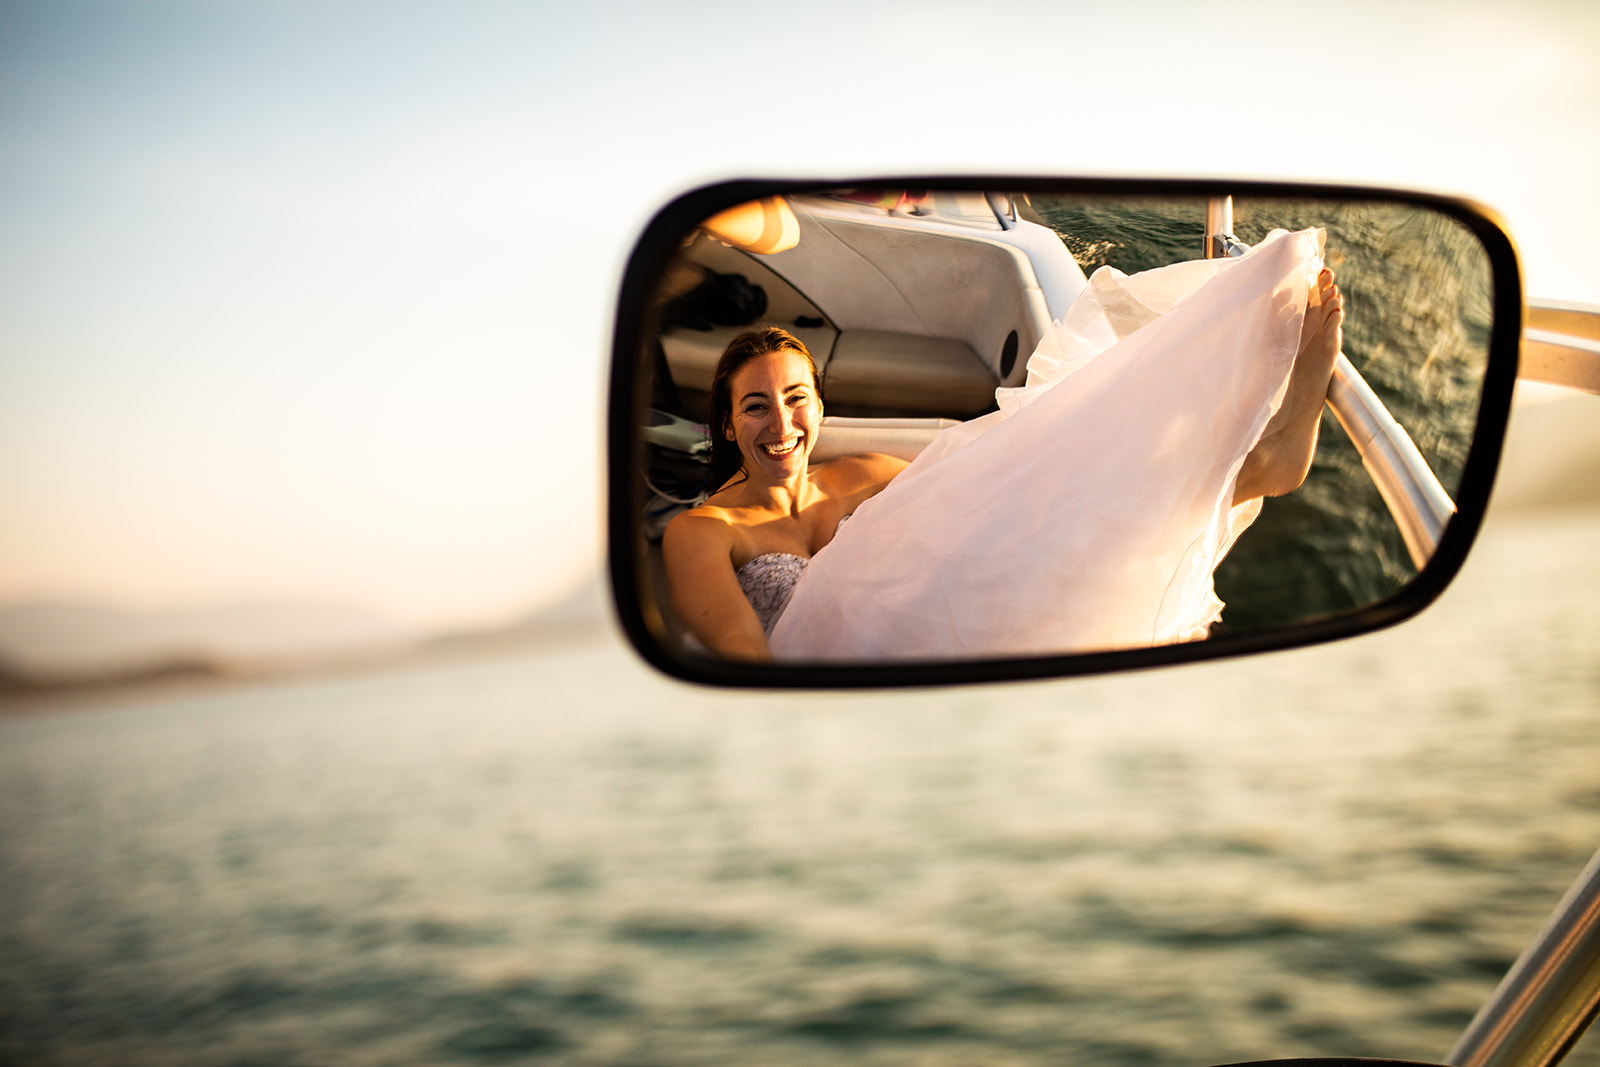 Surfer Bride Adventure in boat mirror by Esther Moerman